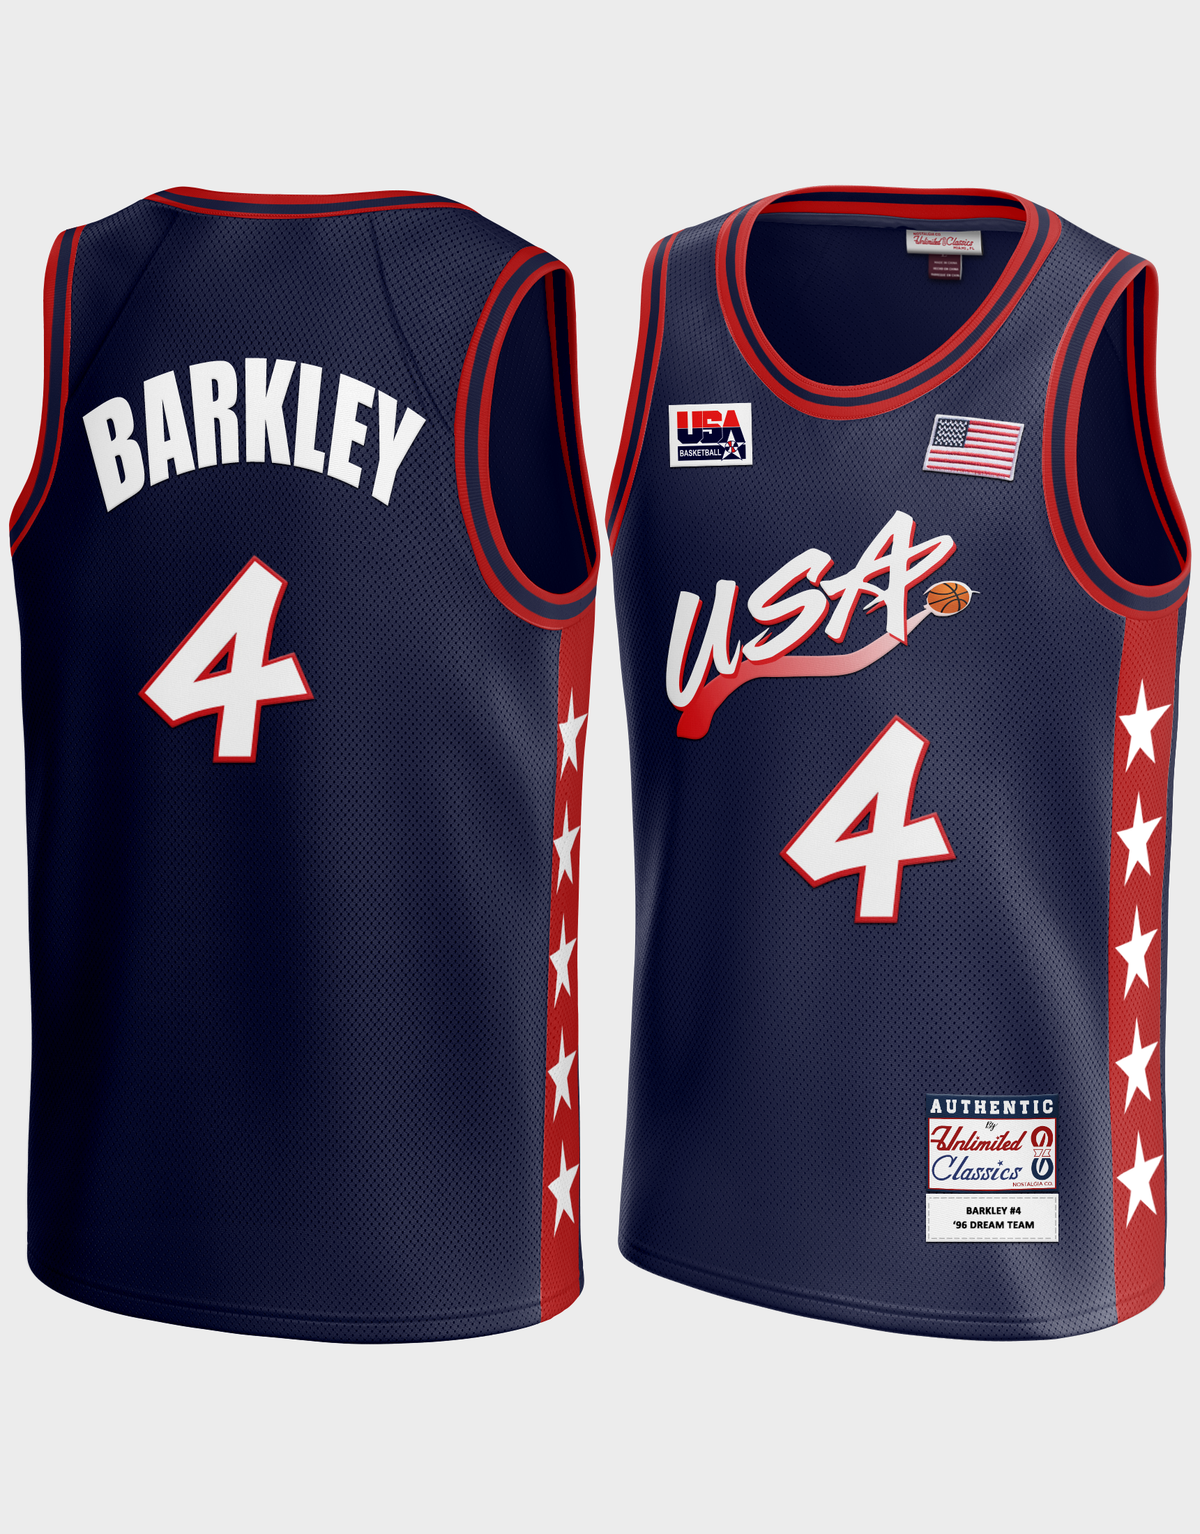 Sir Charles Barkley Inside the NBA President | Active T-Shirt